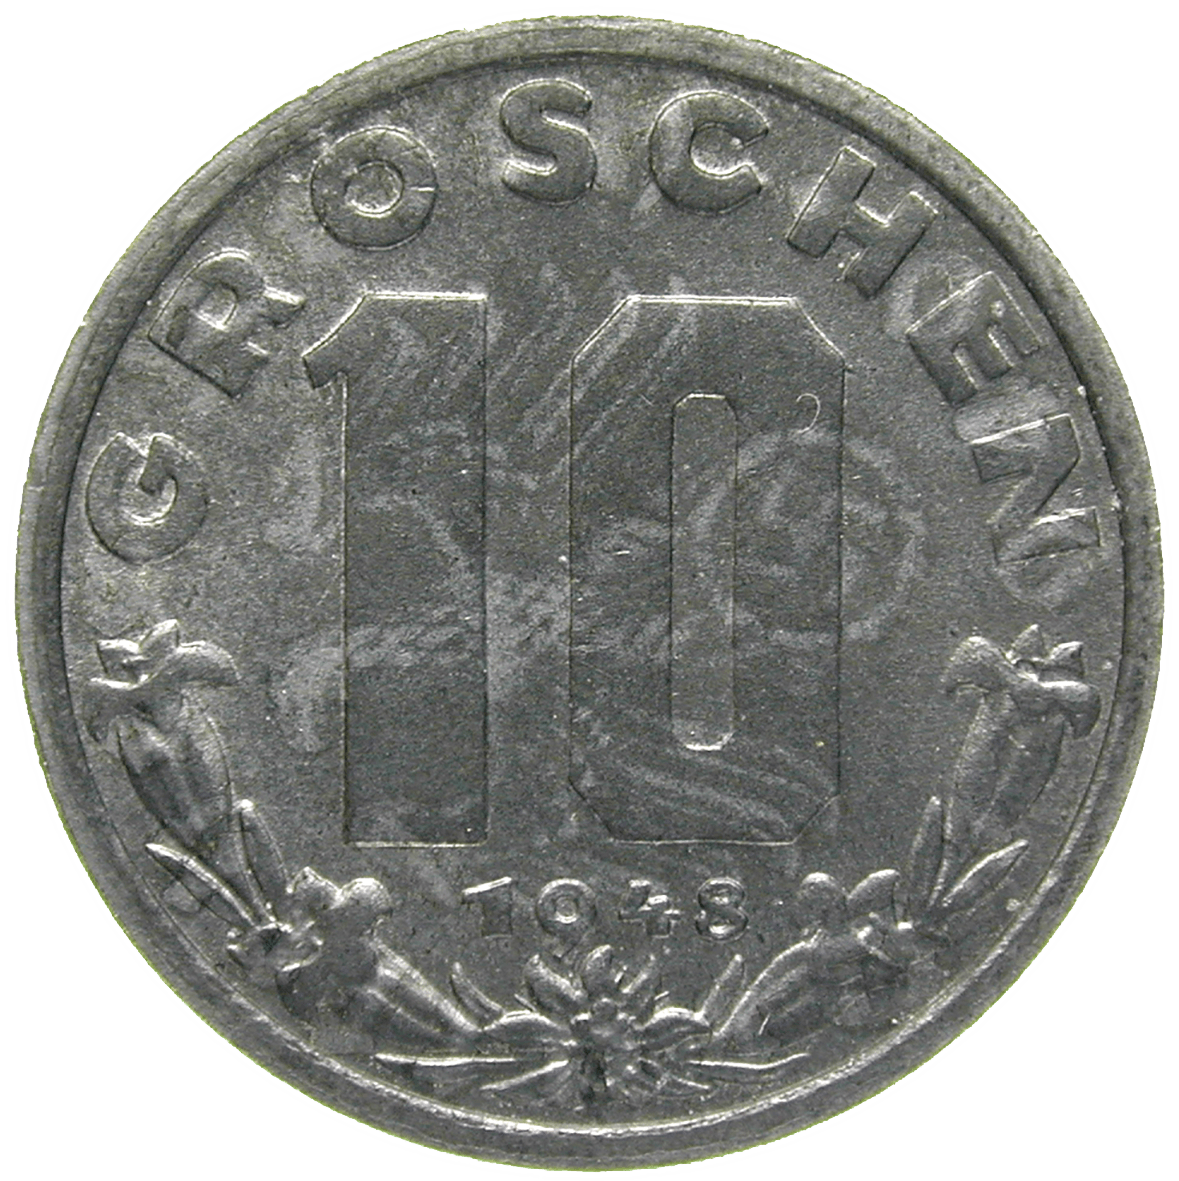 Republic of Austria, 10 Groschen 1948 (reverse)